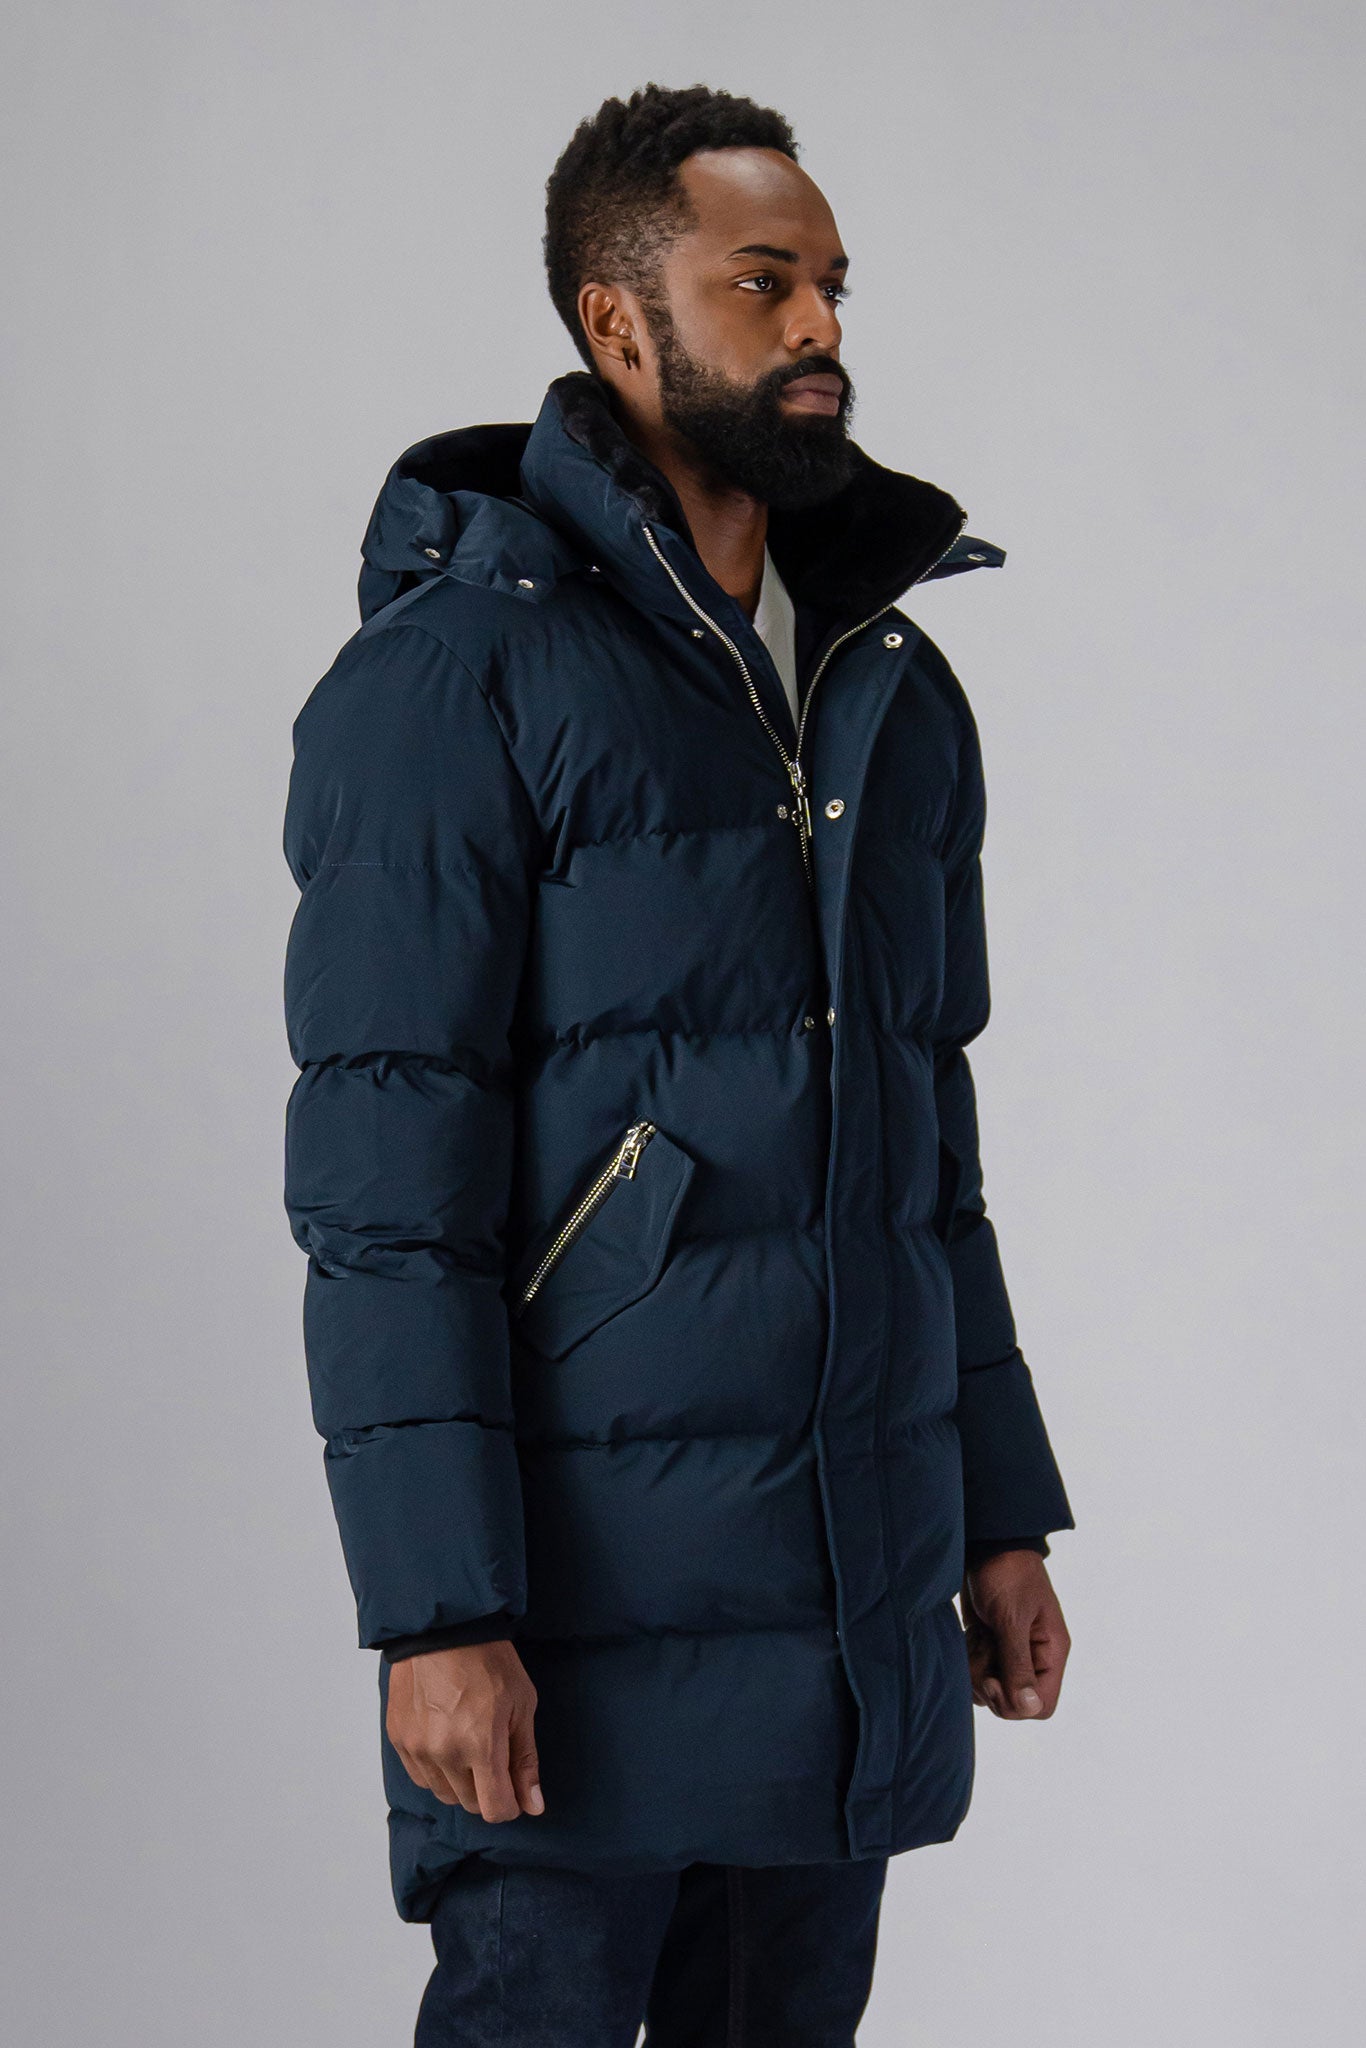 Woodpecker Men's Penguin Long Winter coat. High-end Canadian designer winter coat for men in “Matte Navy